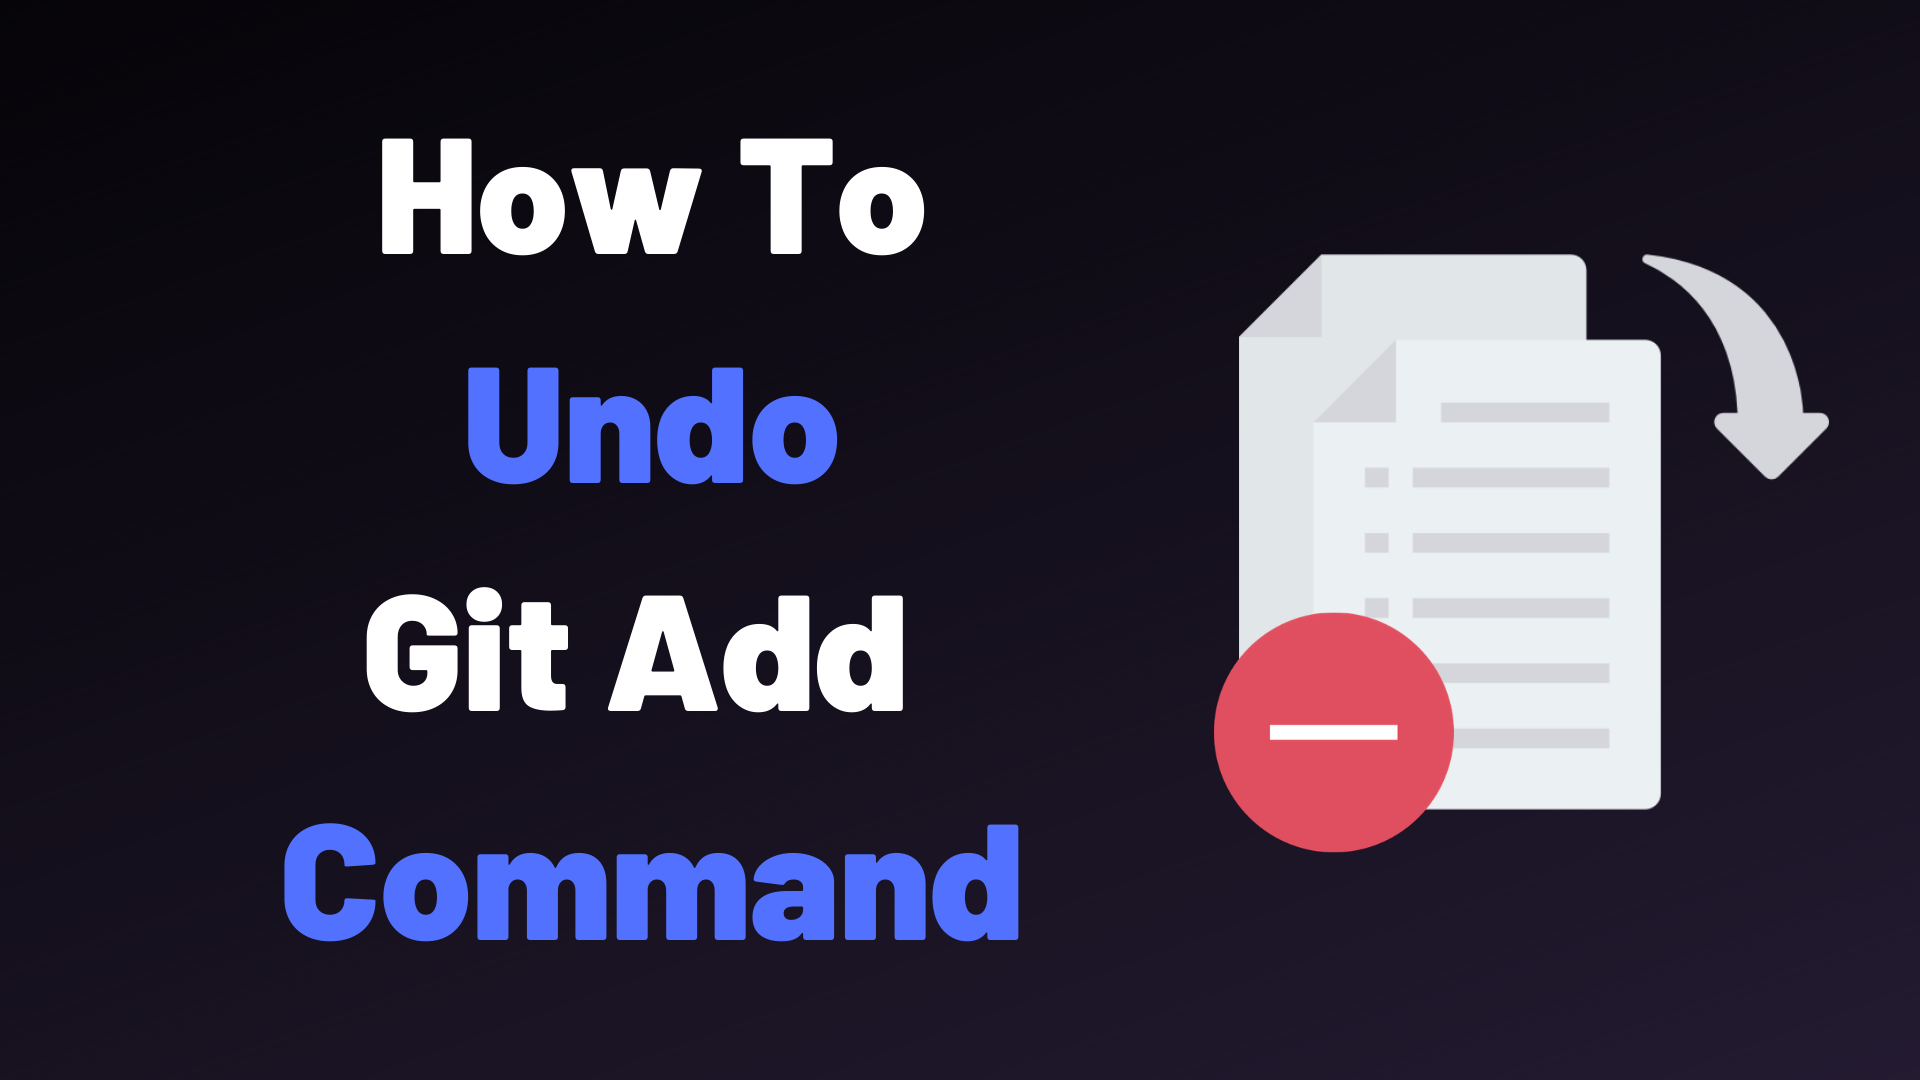 How To Undo Git Add Command